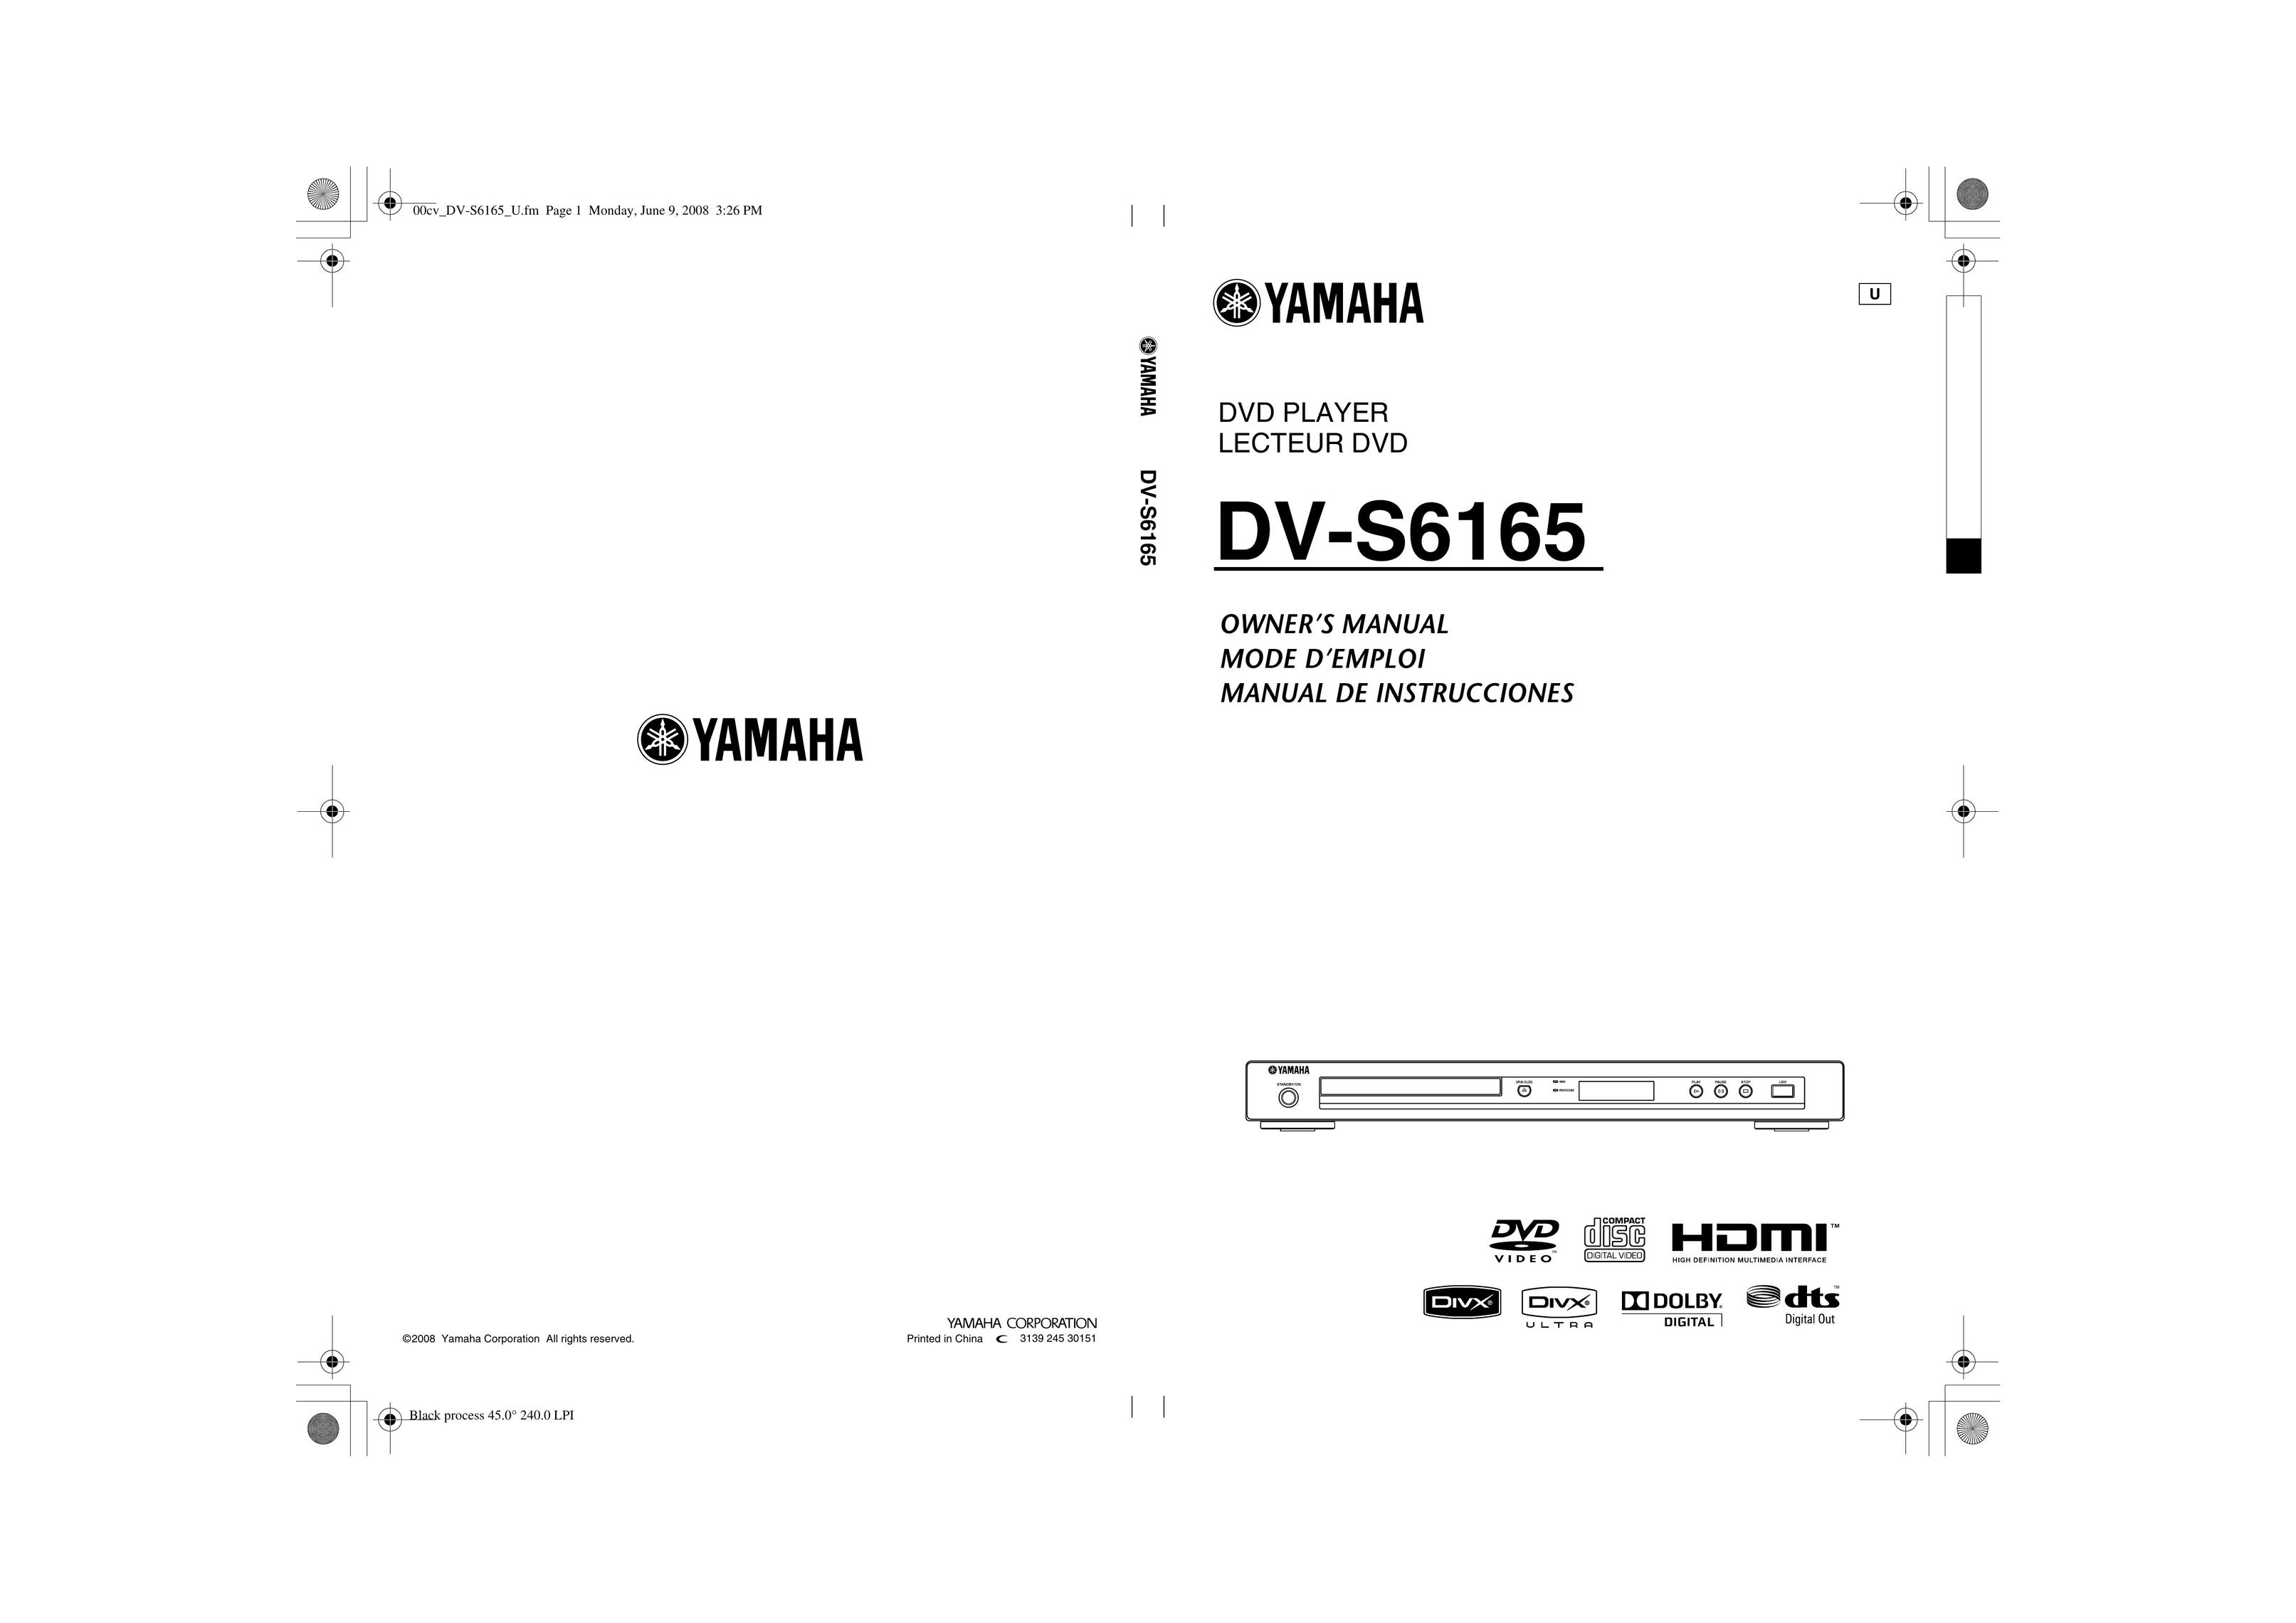 Yamaha DV-S6165 DVD Player User Manual